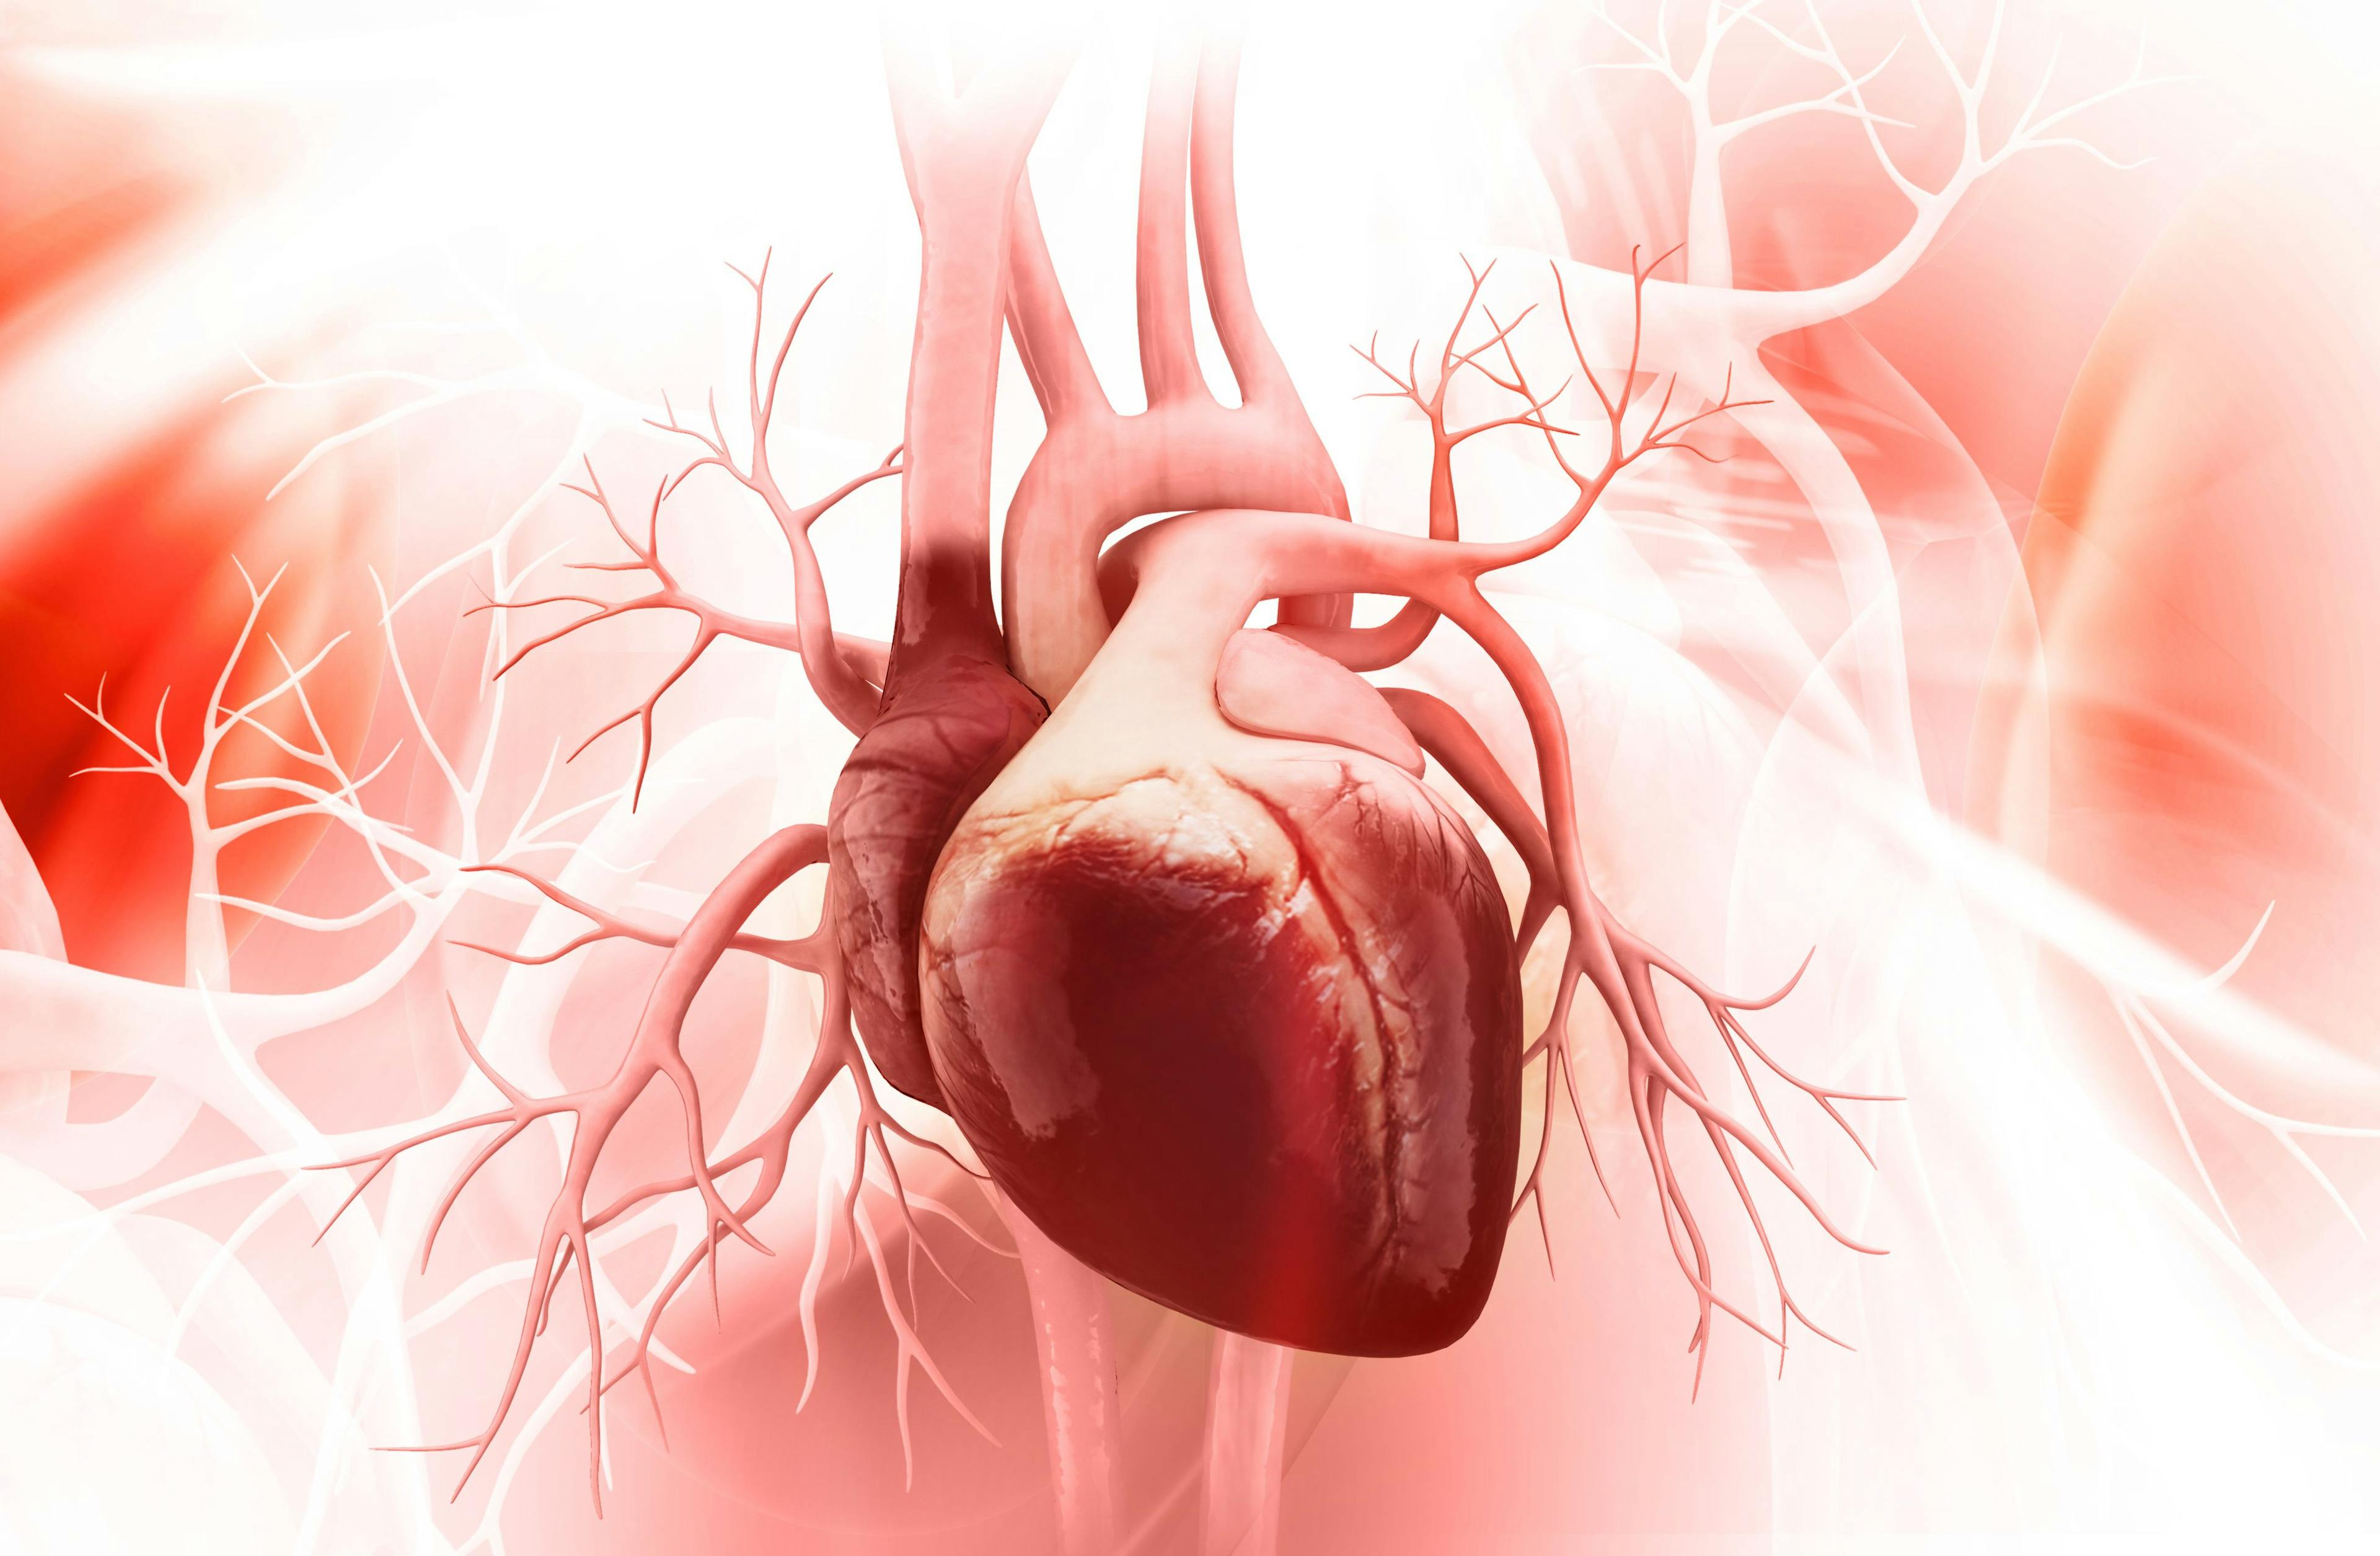 Digital illustration of a heart and vascular system. 